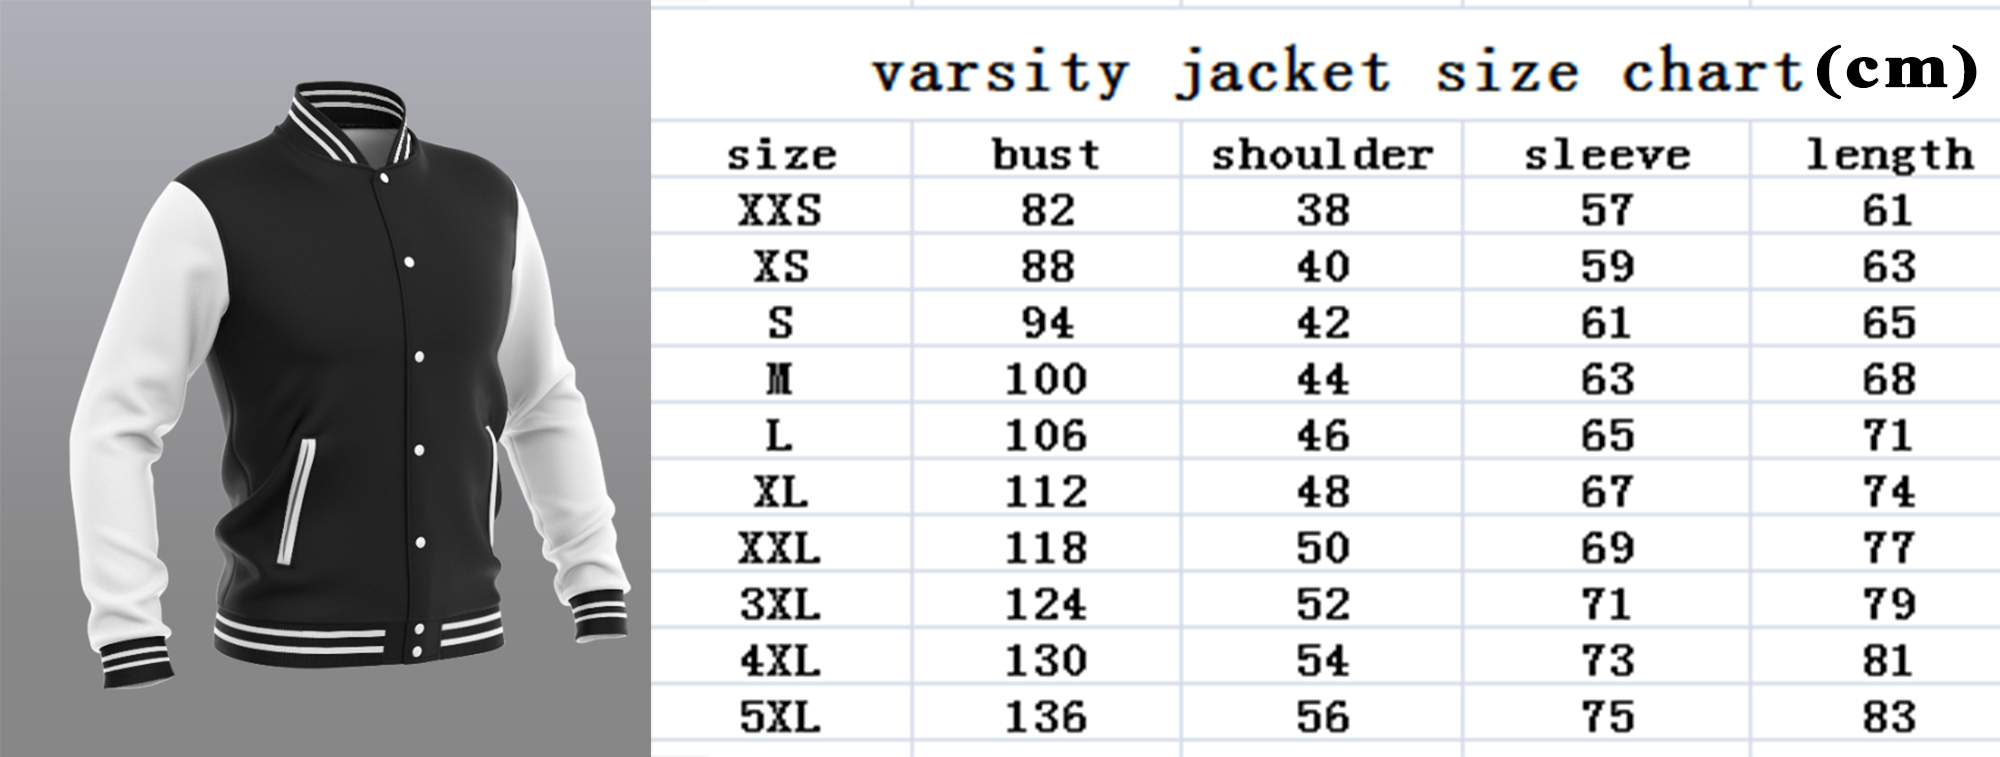 Baseball - Varsity Jacket